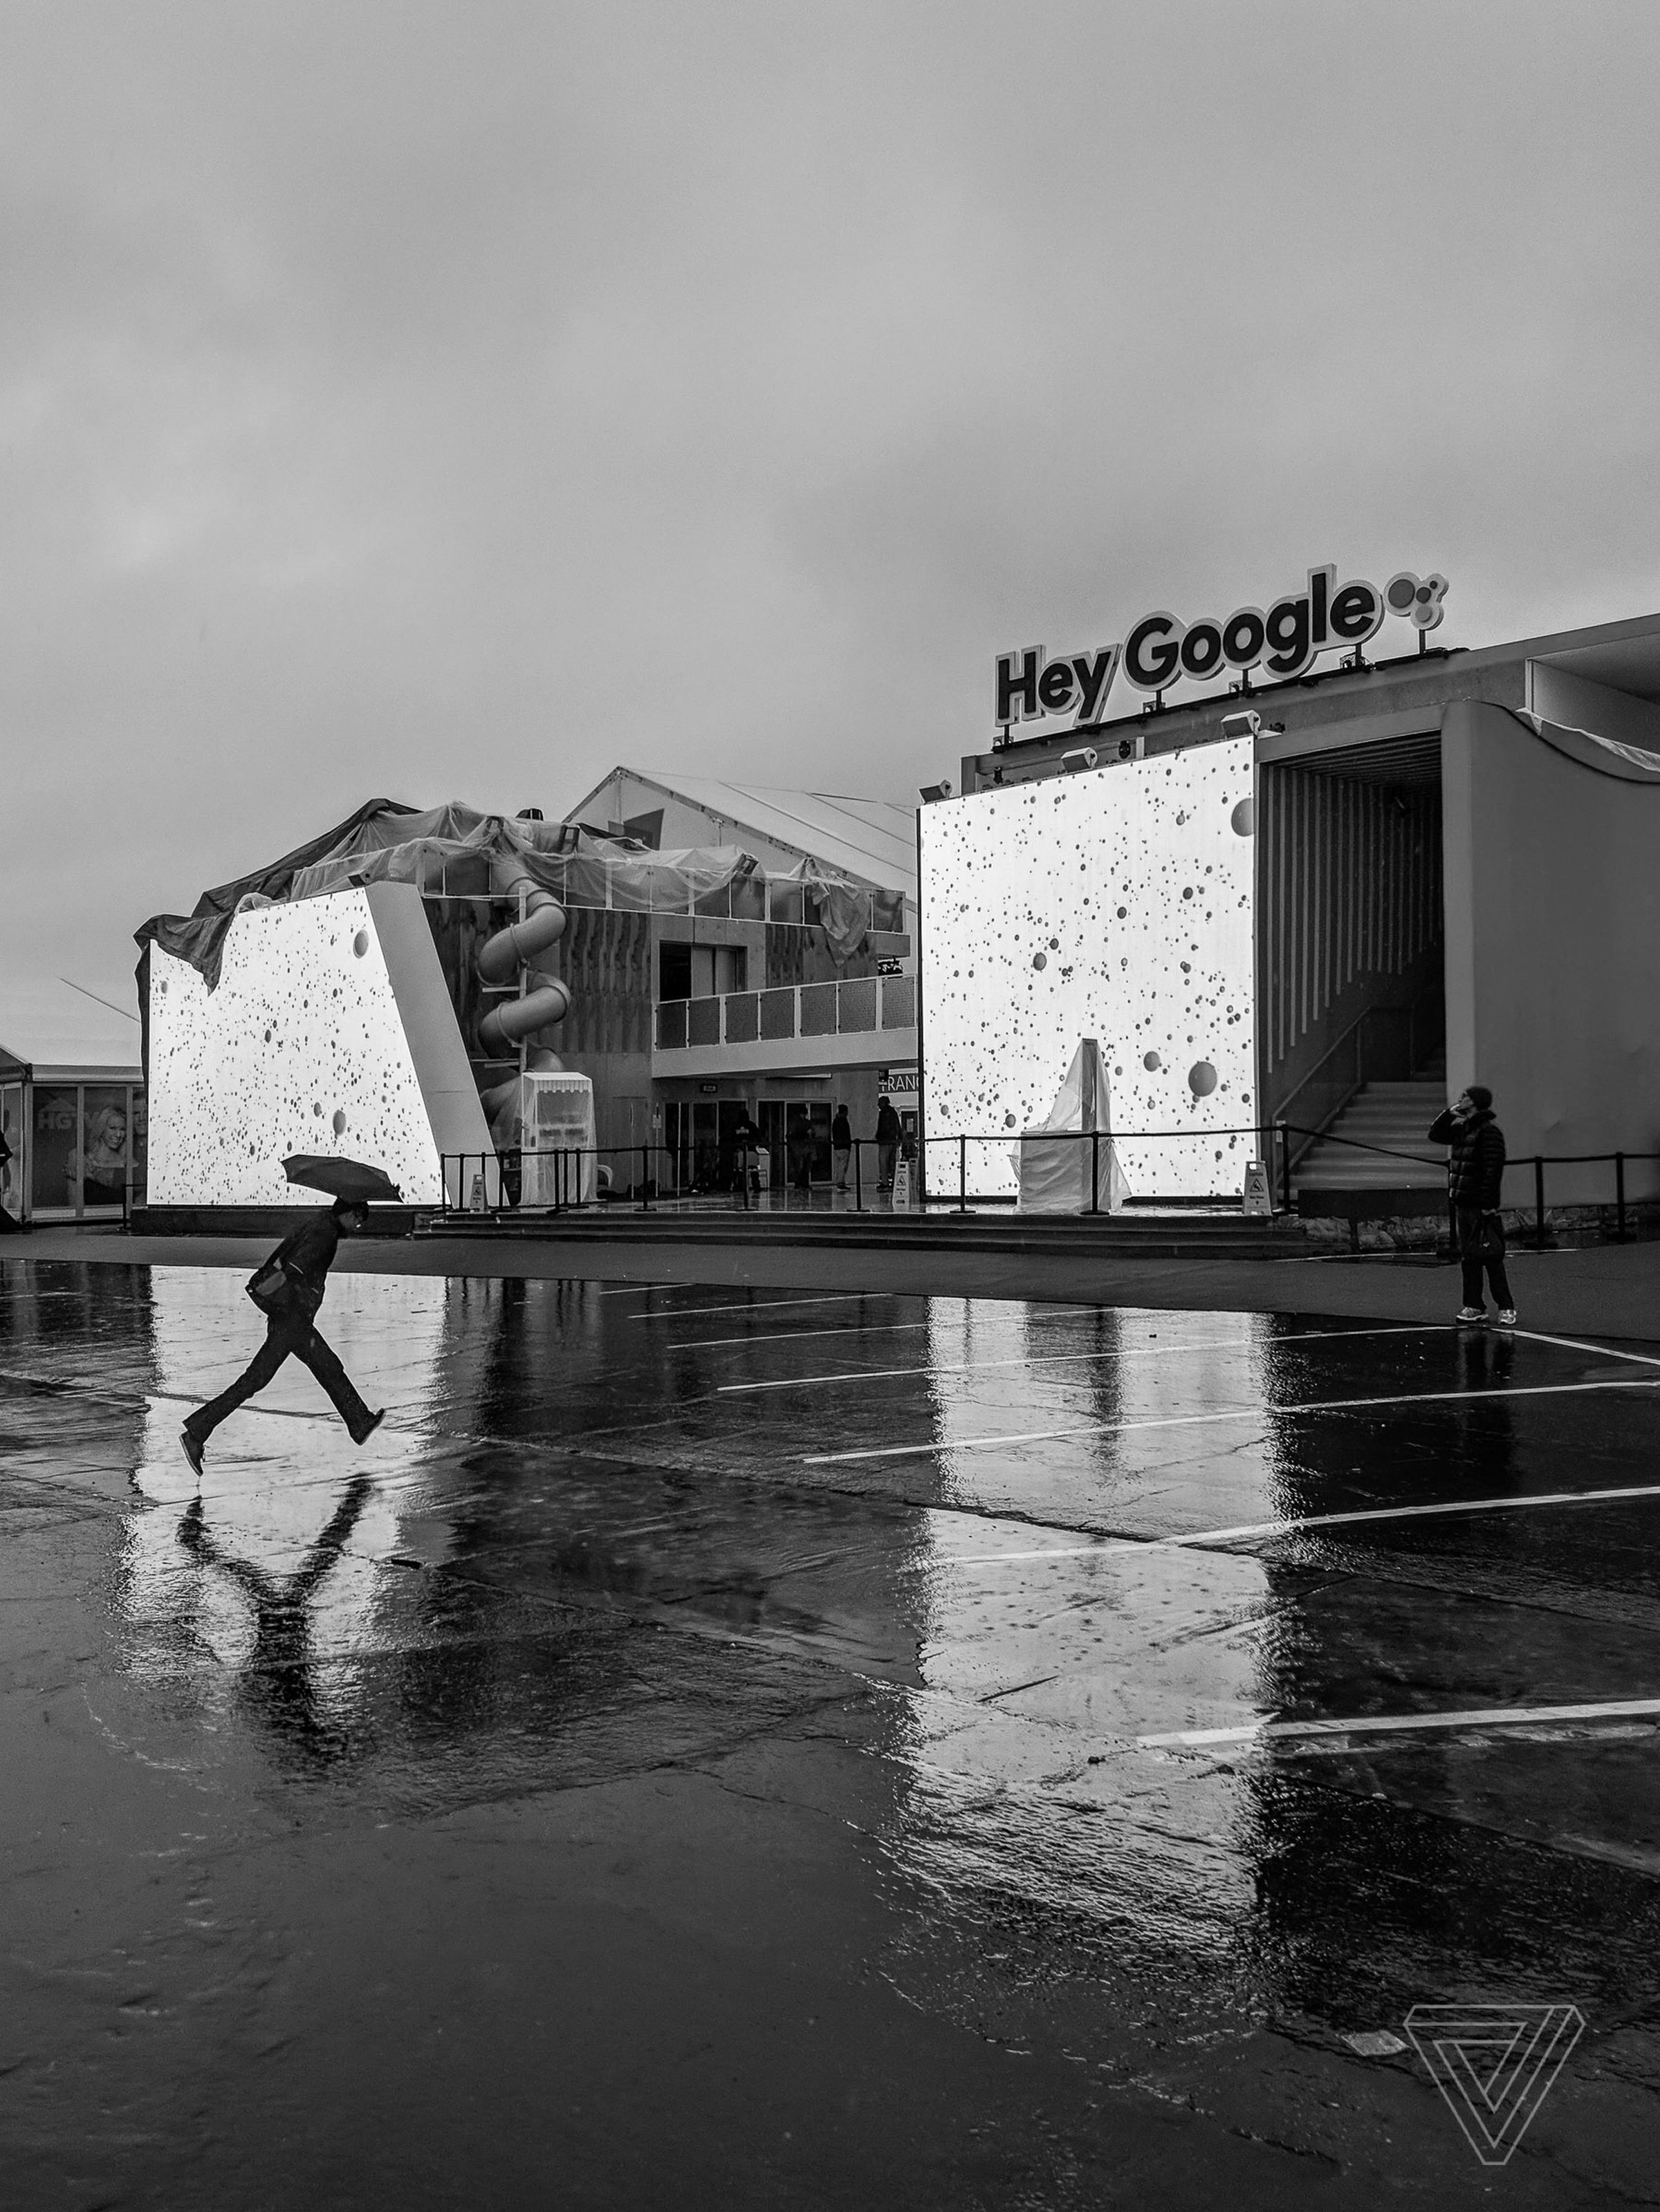 Rain stops Google play (pun intended)